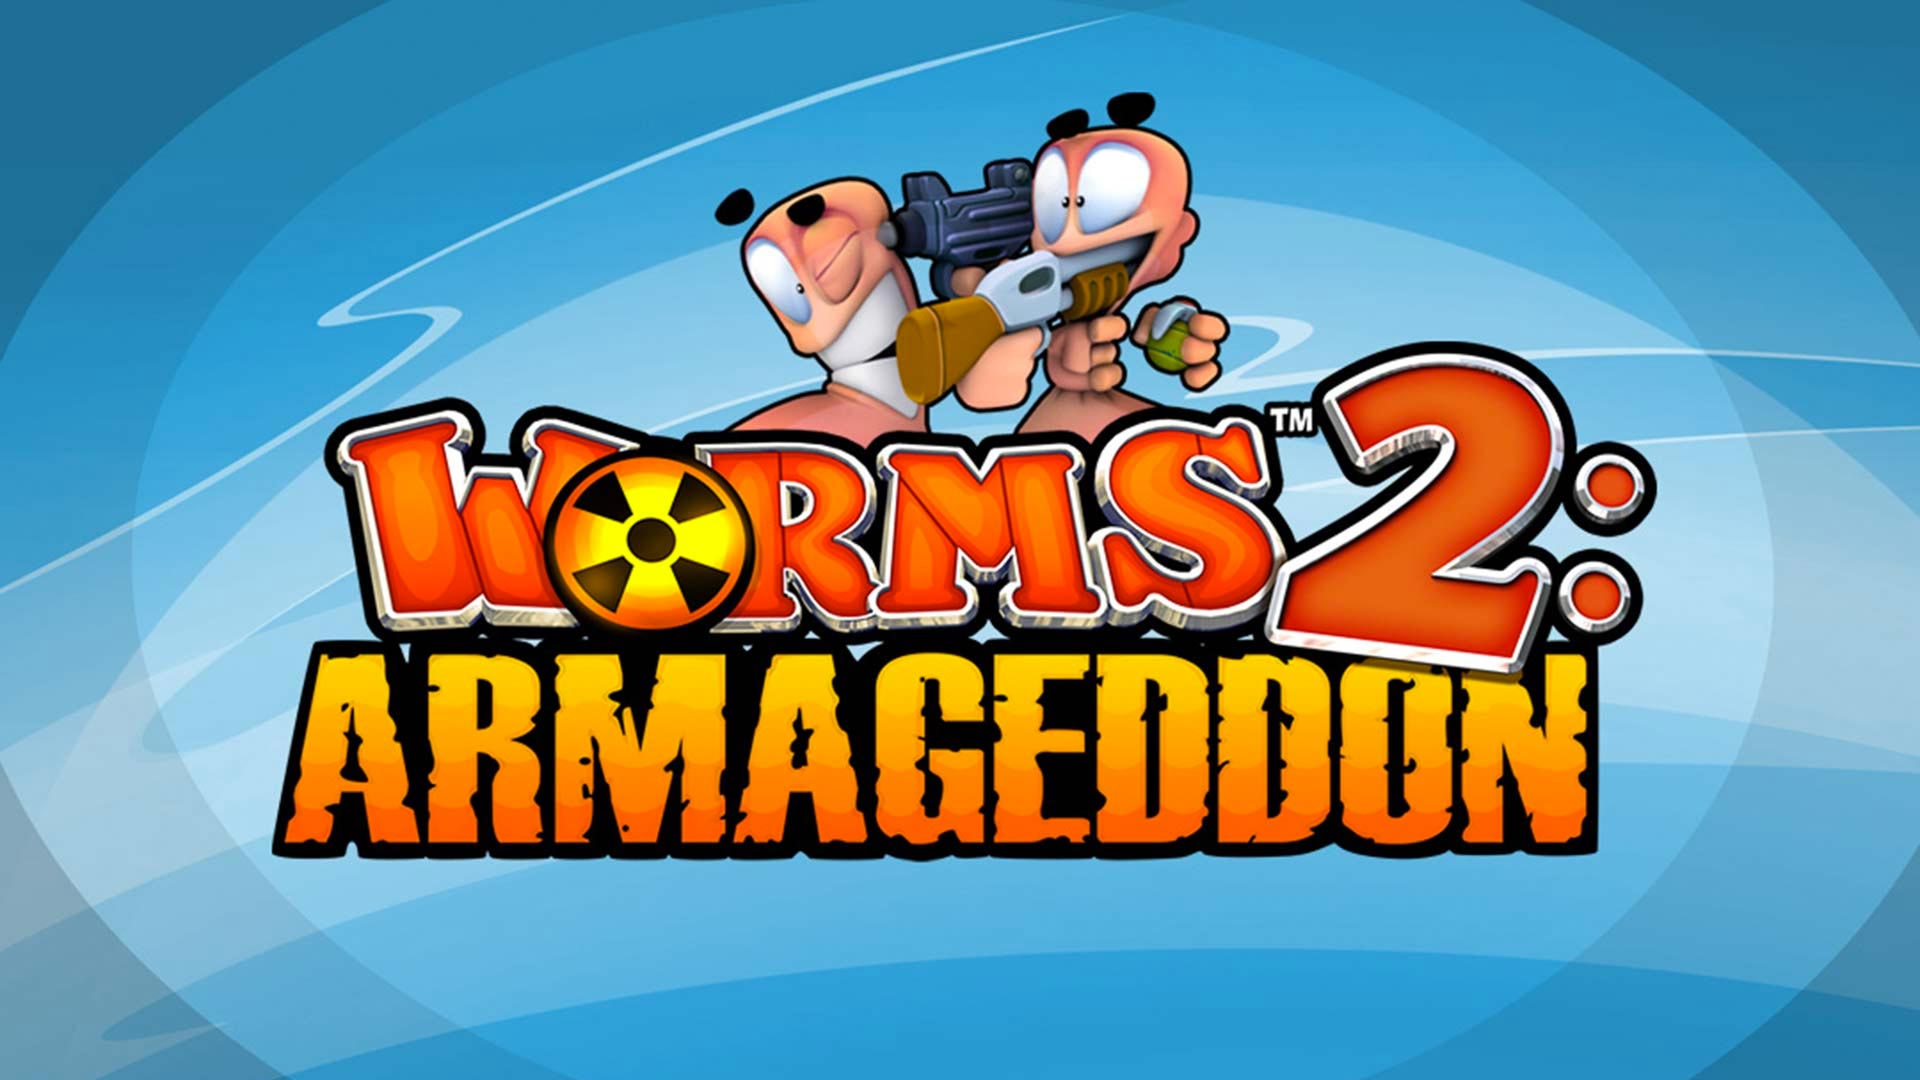 Worms armageddon on steam фото 20